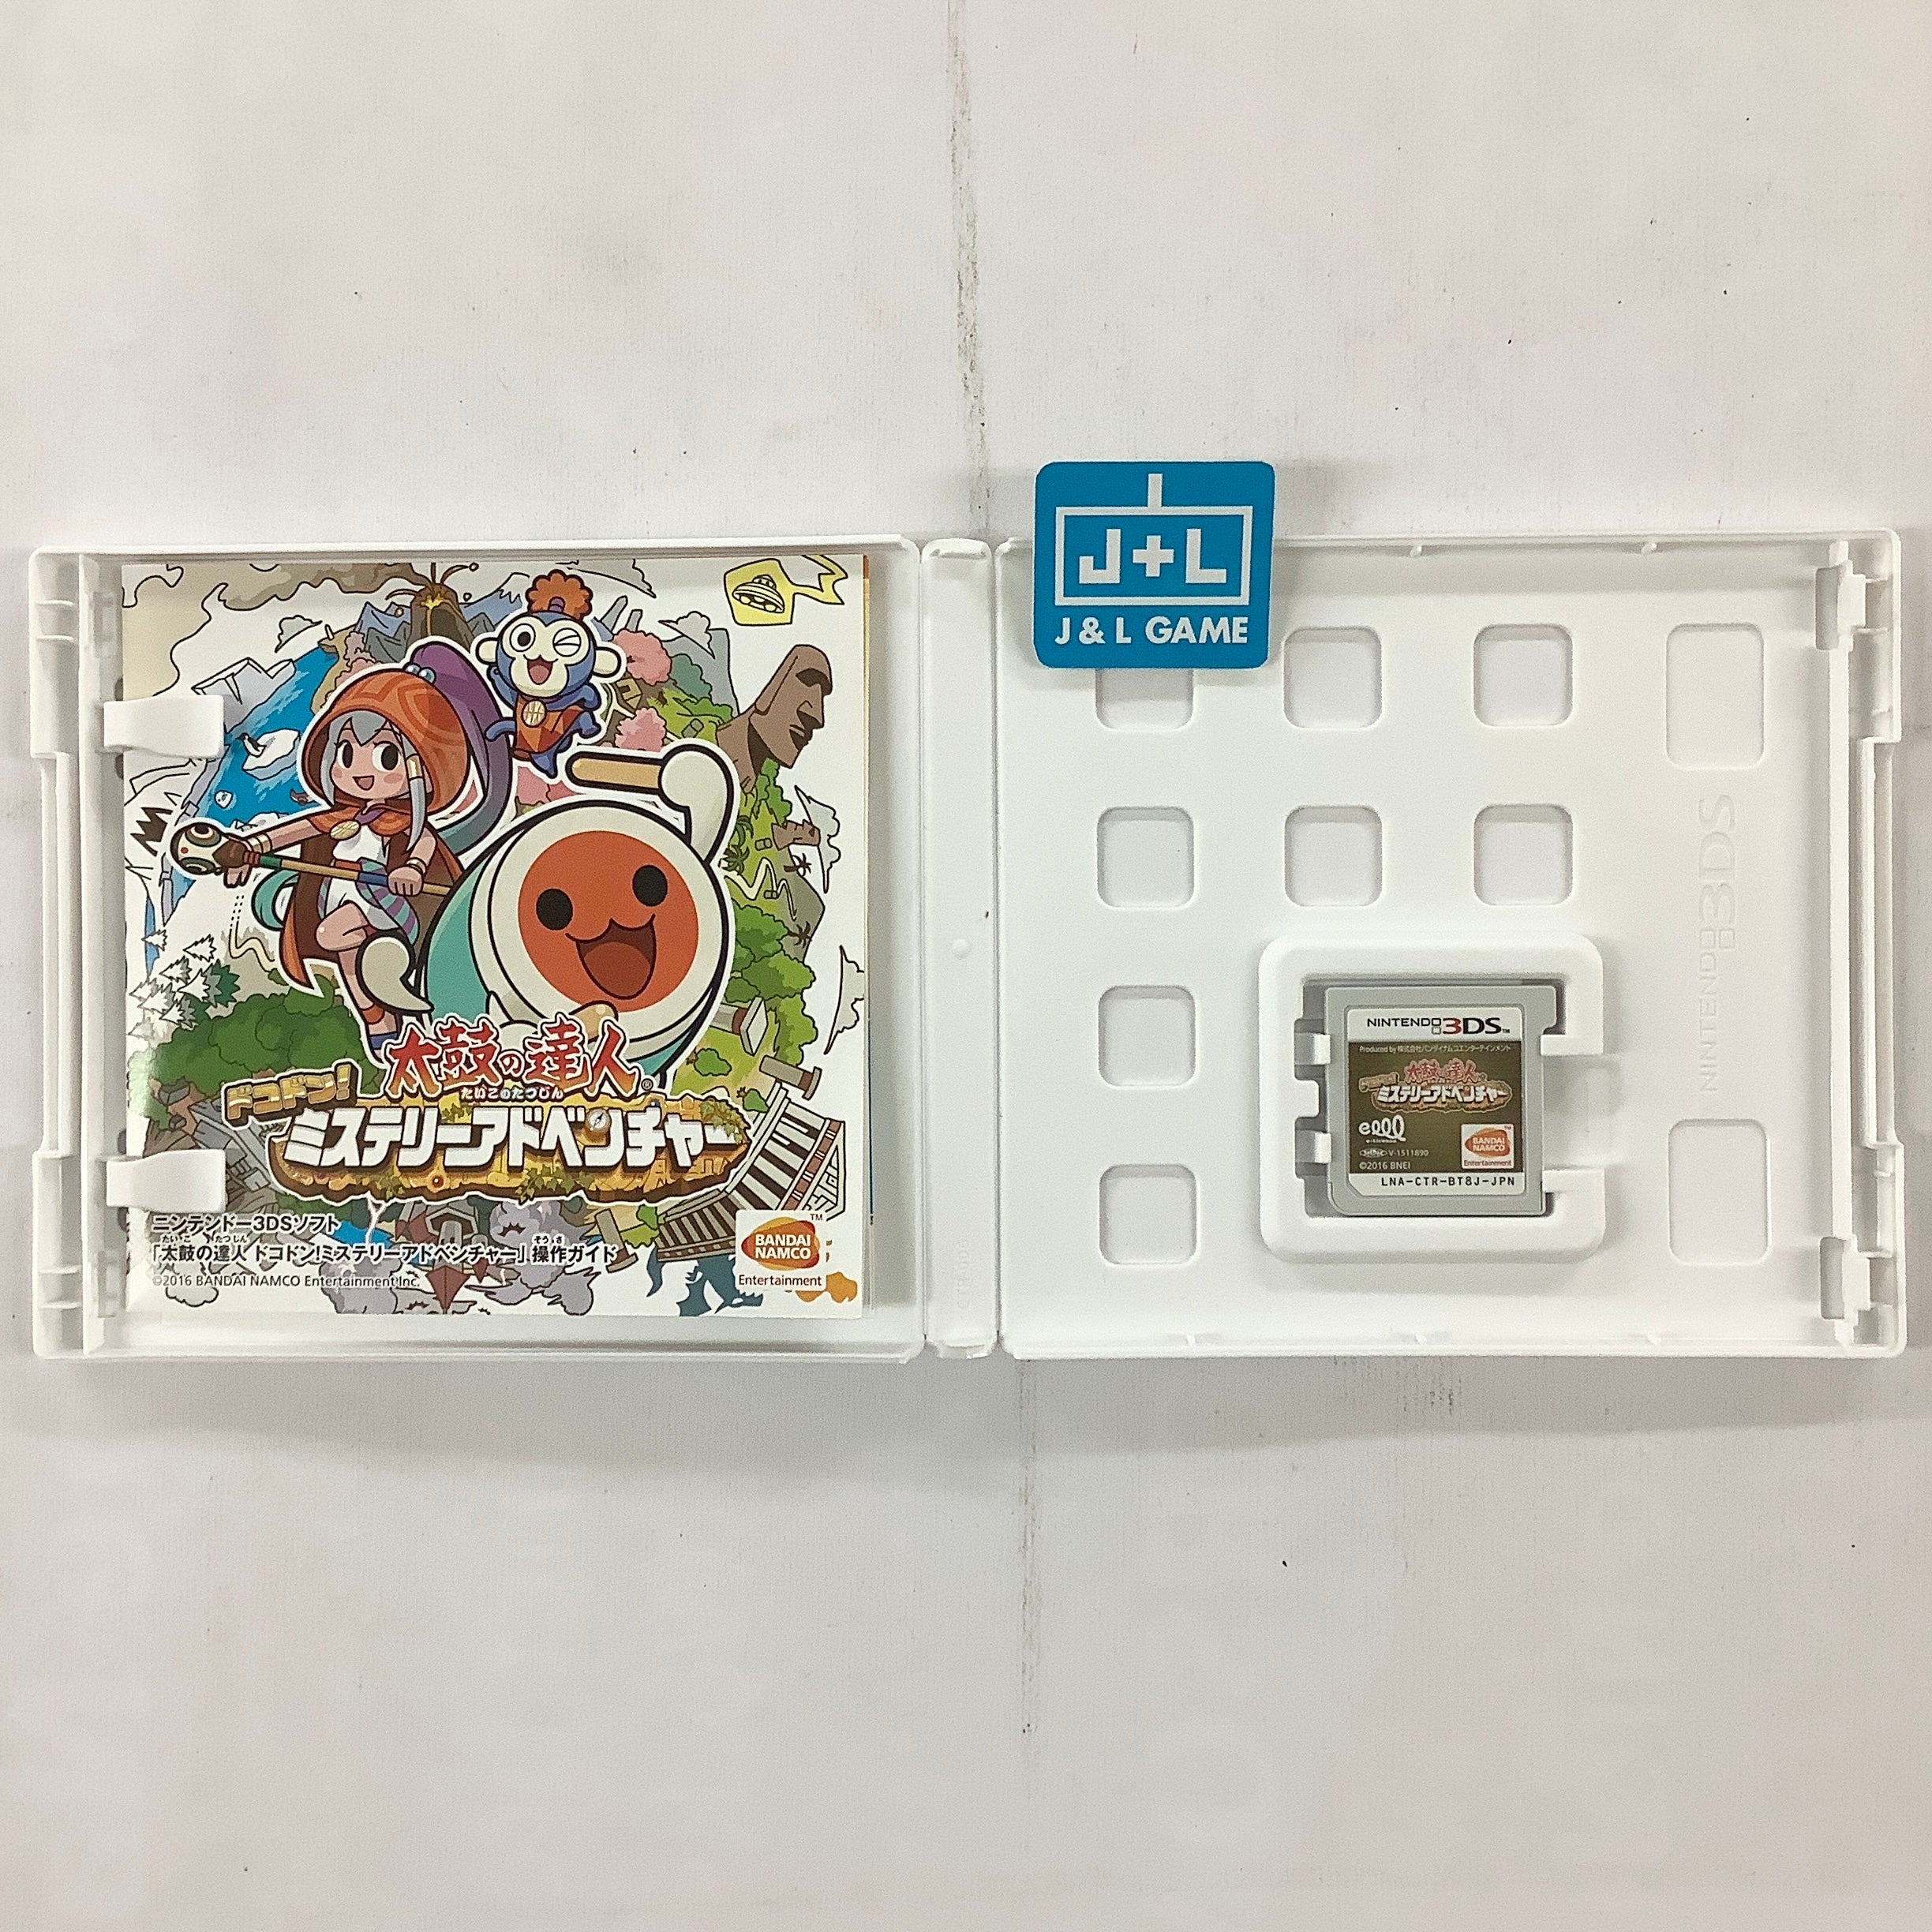 Taiko no Tatsujin: Dokodon! Mystery Adventure - Nintendo 3DS [Pre-Owned] (Japanese Import) Video Games Bandai Namco Games   